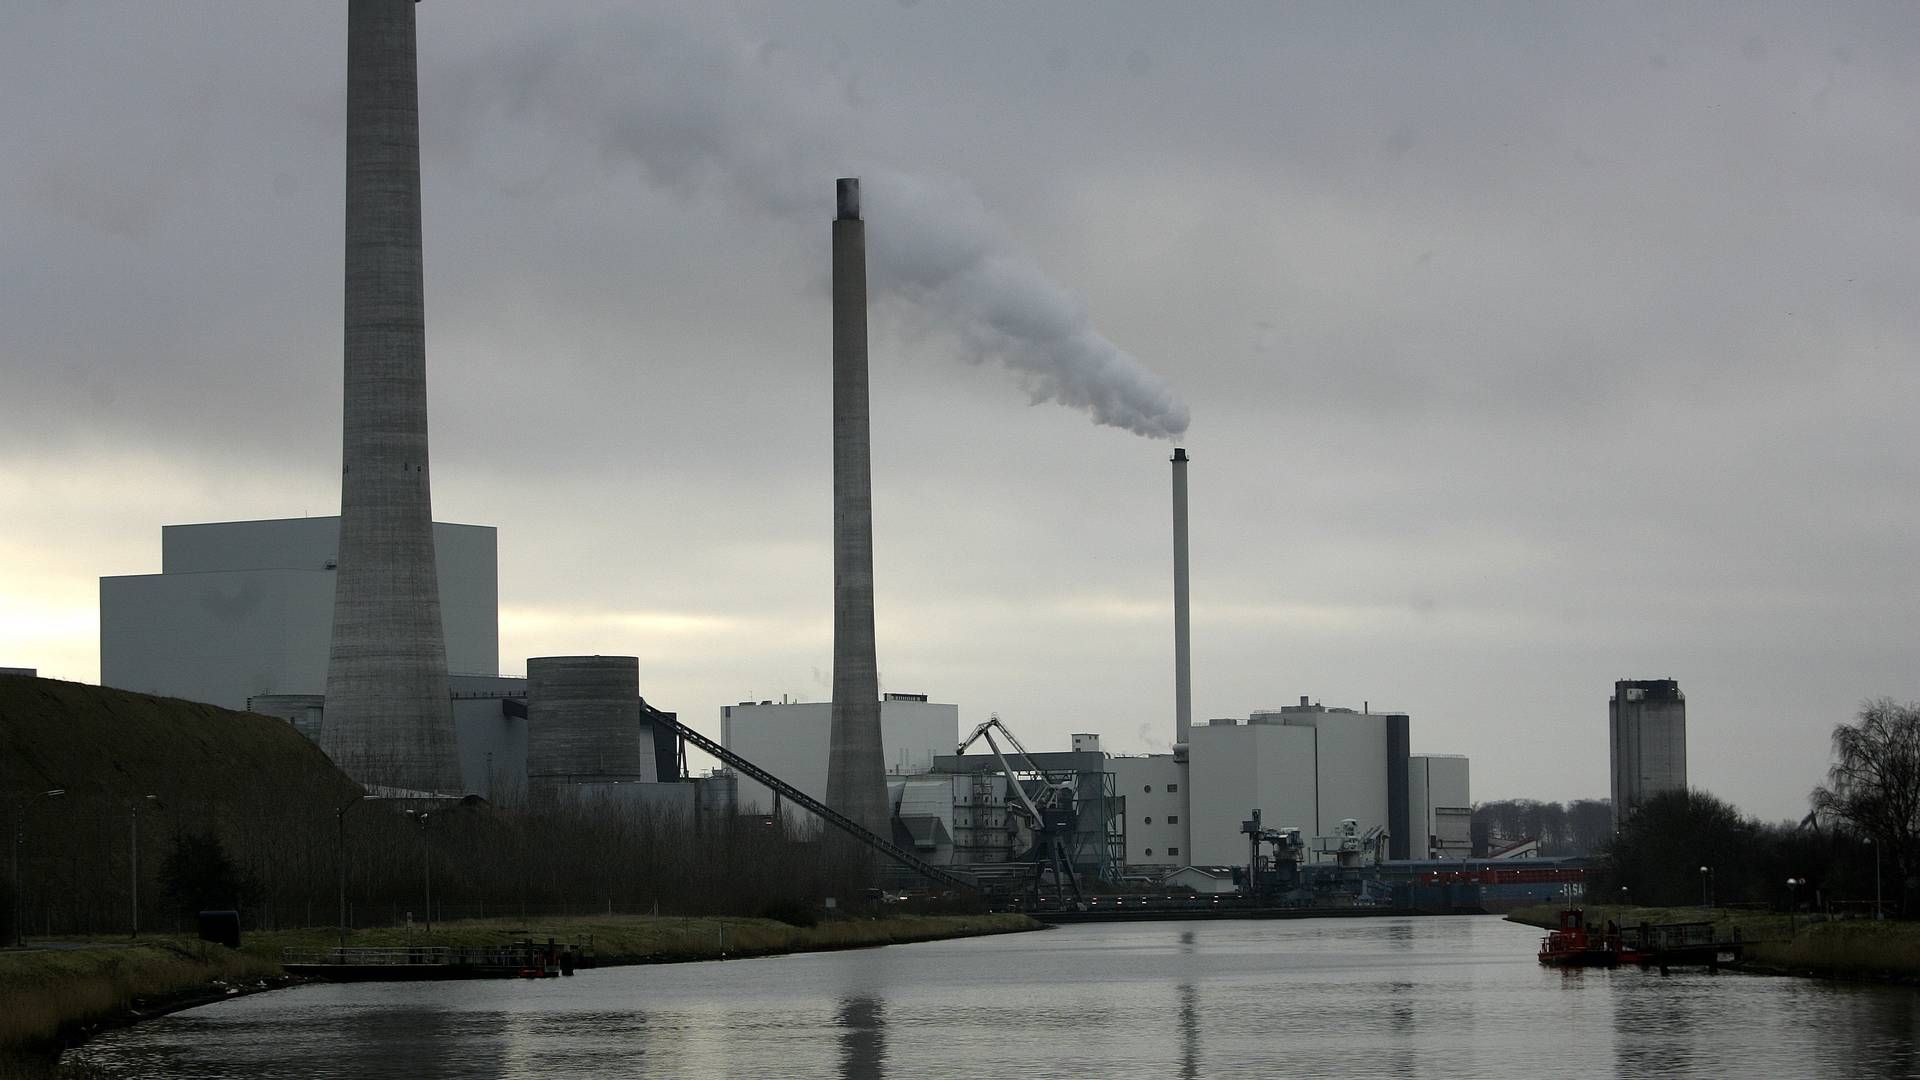 Funen Power Station burning coal. | Photo: Lars Skaaning